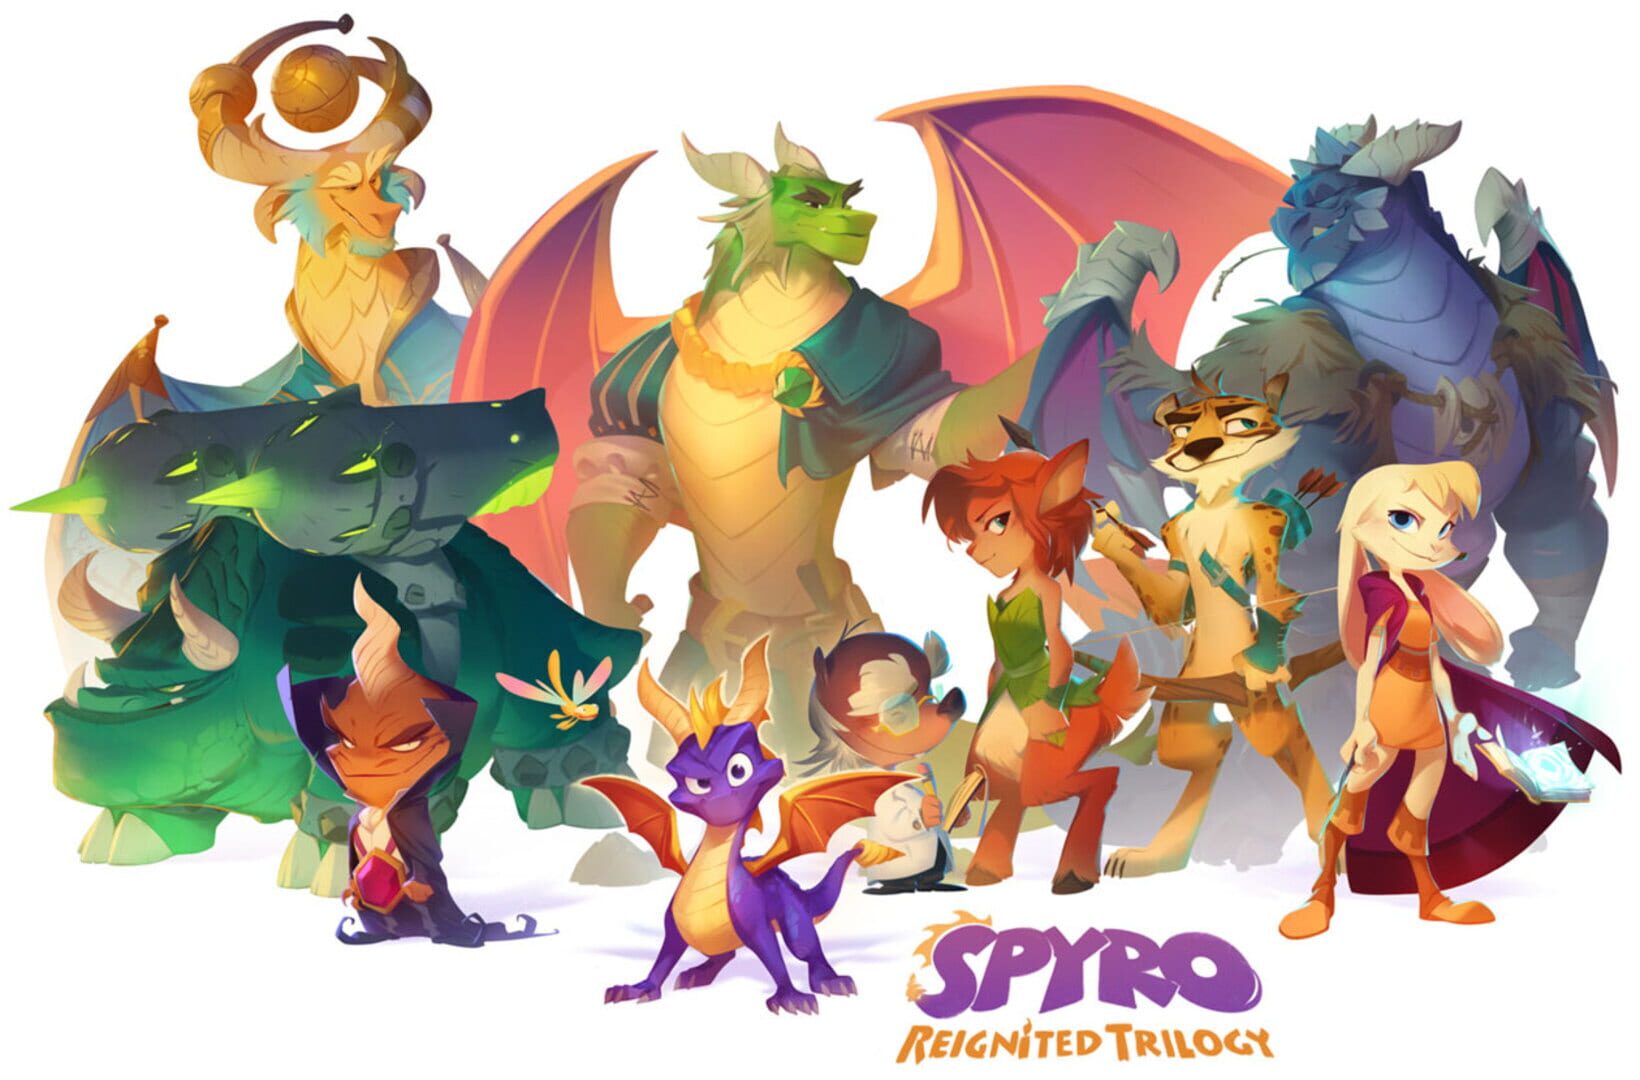 Arte - Spyro Reignited Trilogy